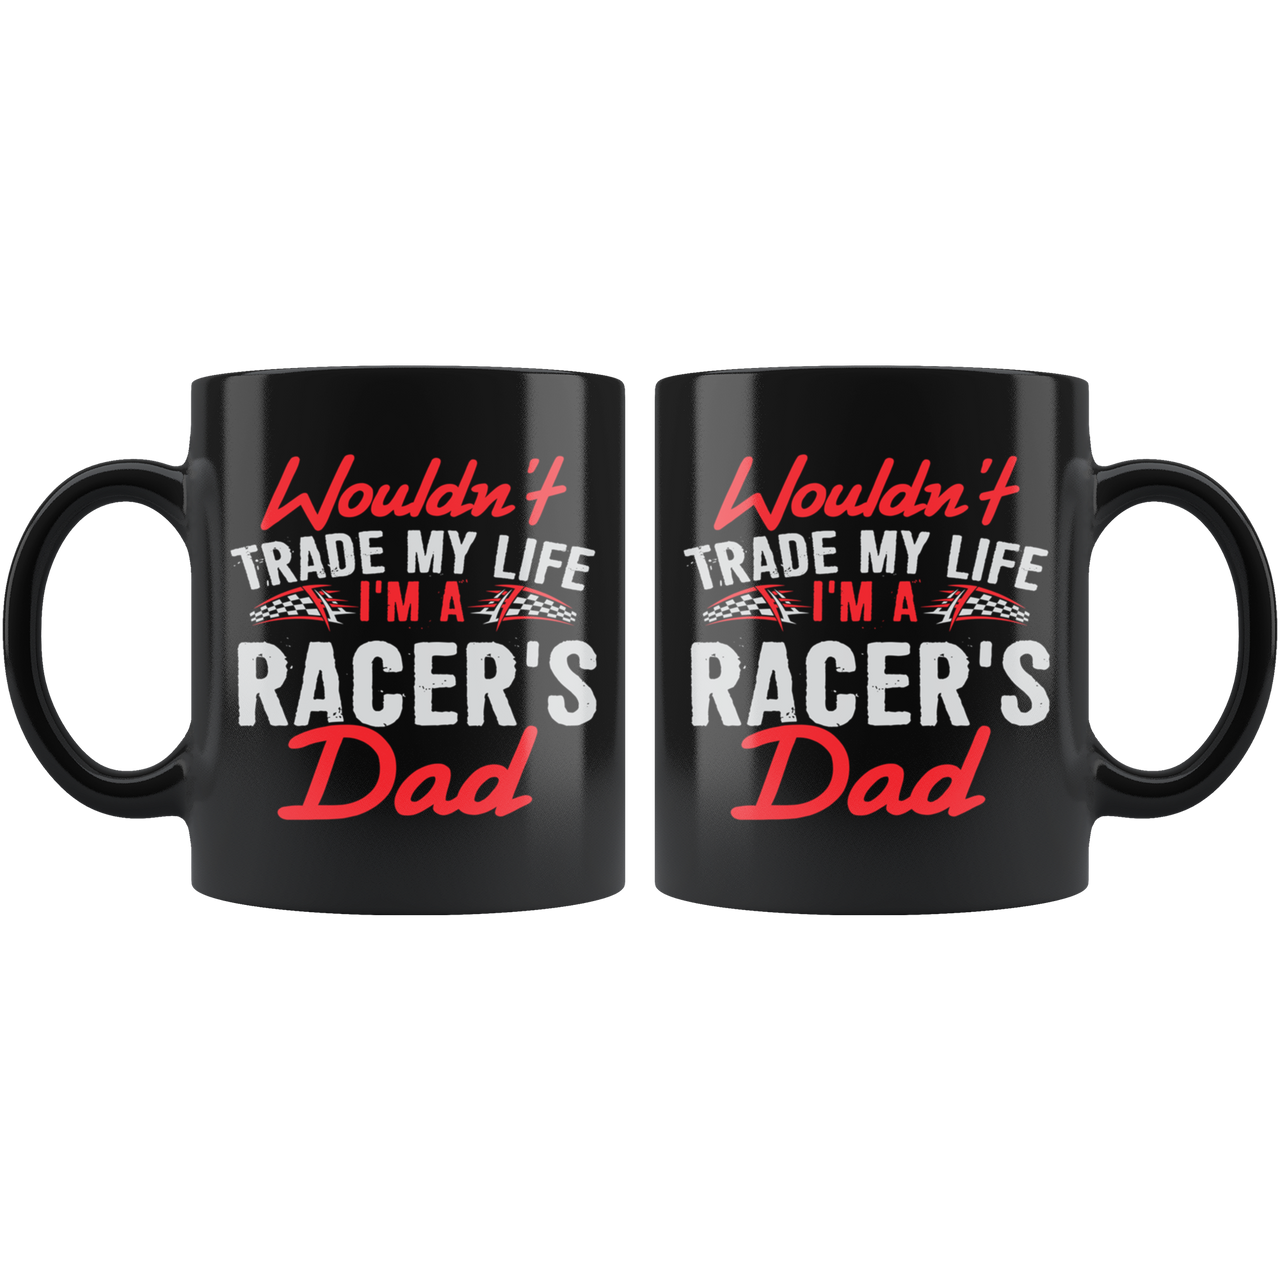 Wouldn't Trade My Life I'm A Racer's Dad Mug!